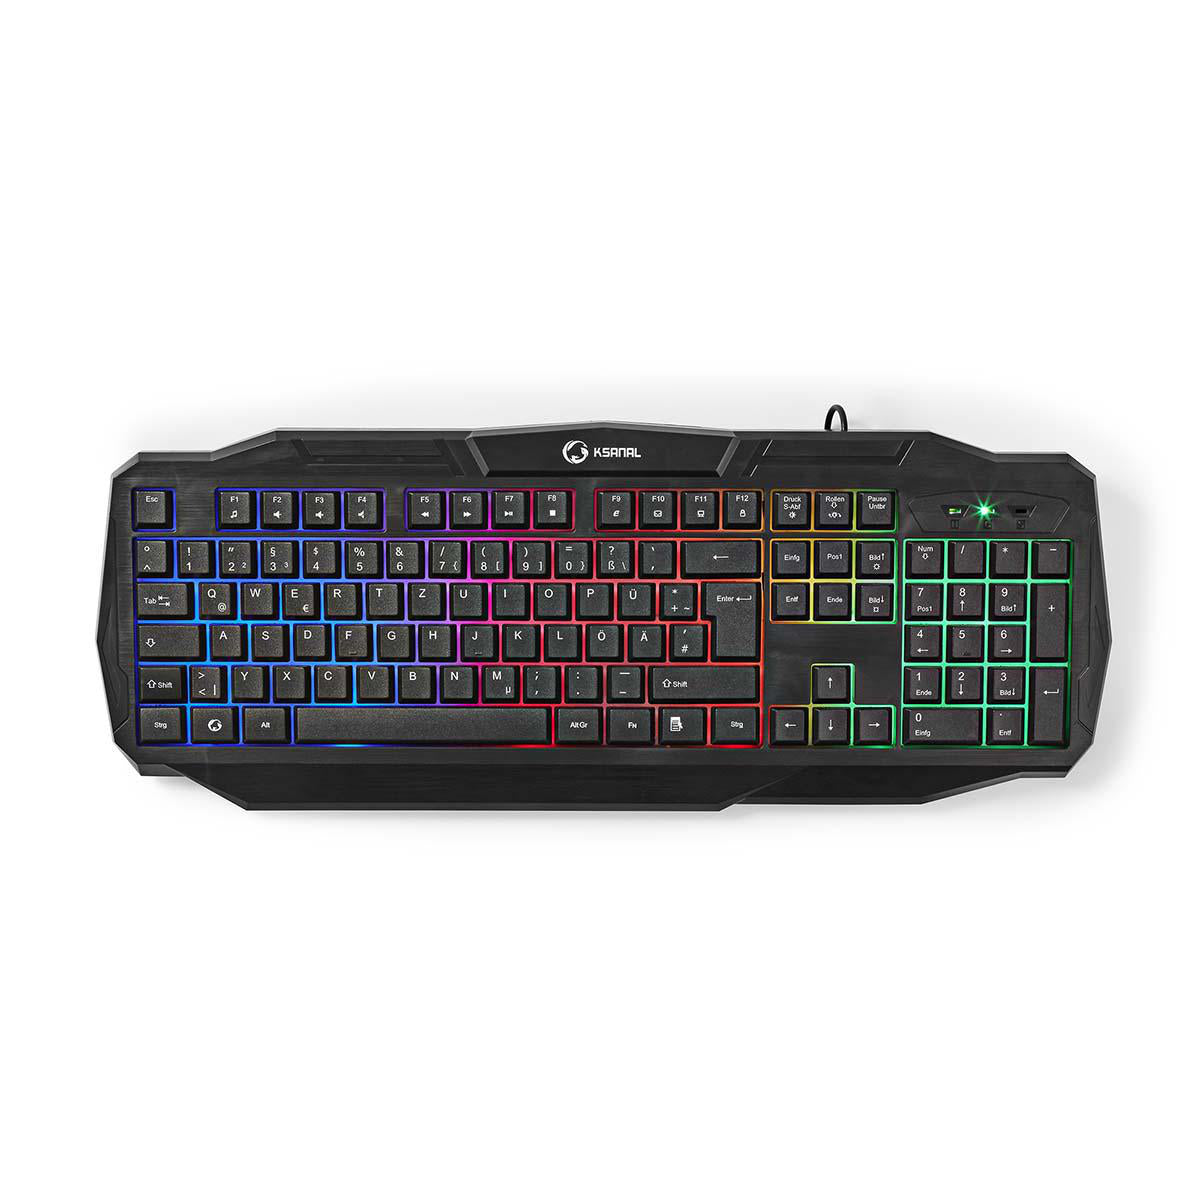 Gaming Tastatur Deutsch LED Multicolor Beleuchtung USB Keyboard Schwarz QWERTZ